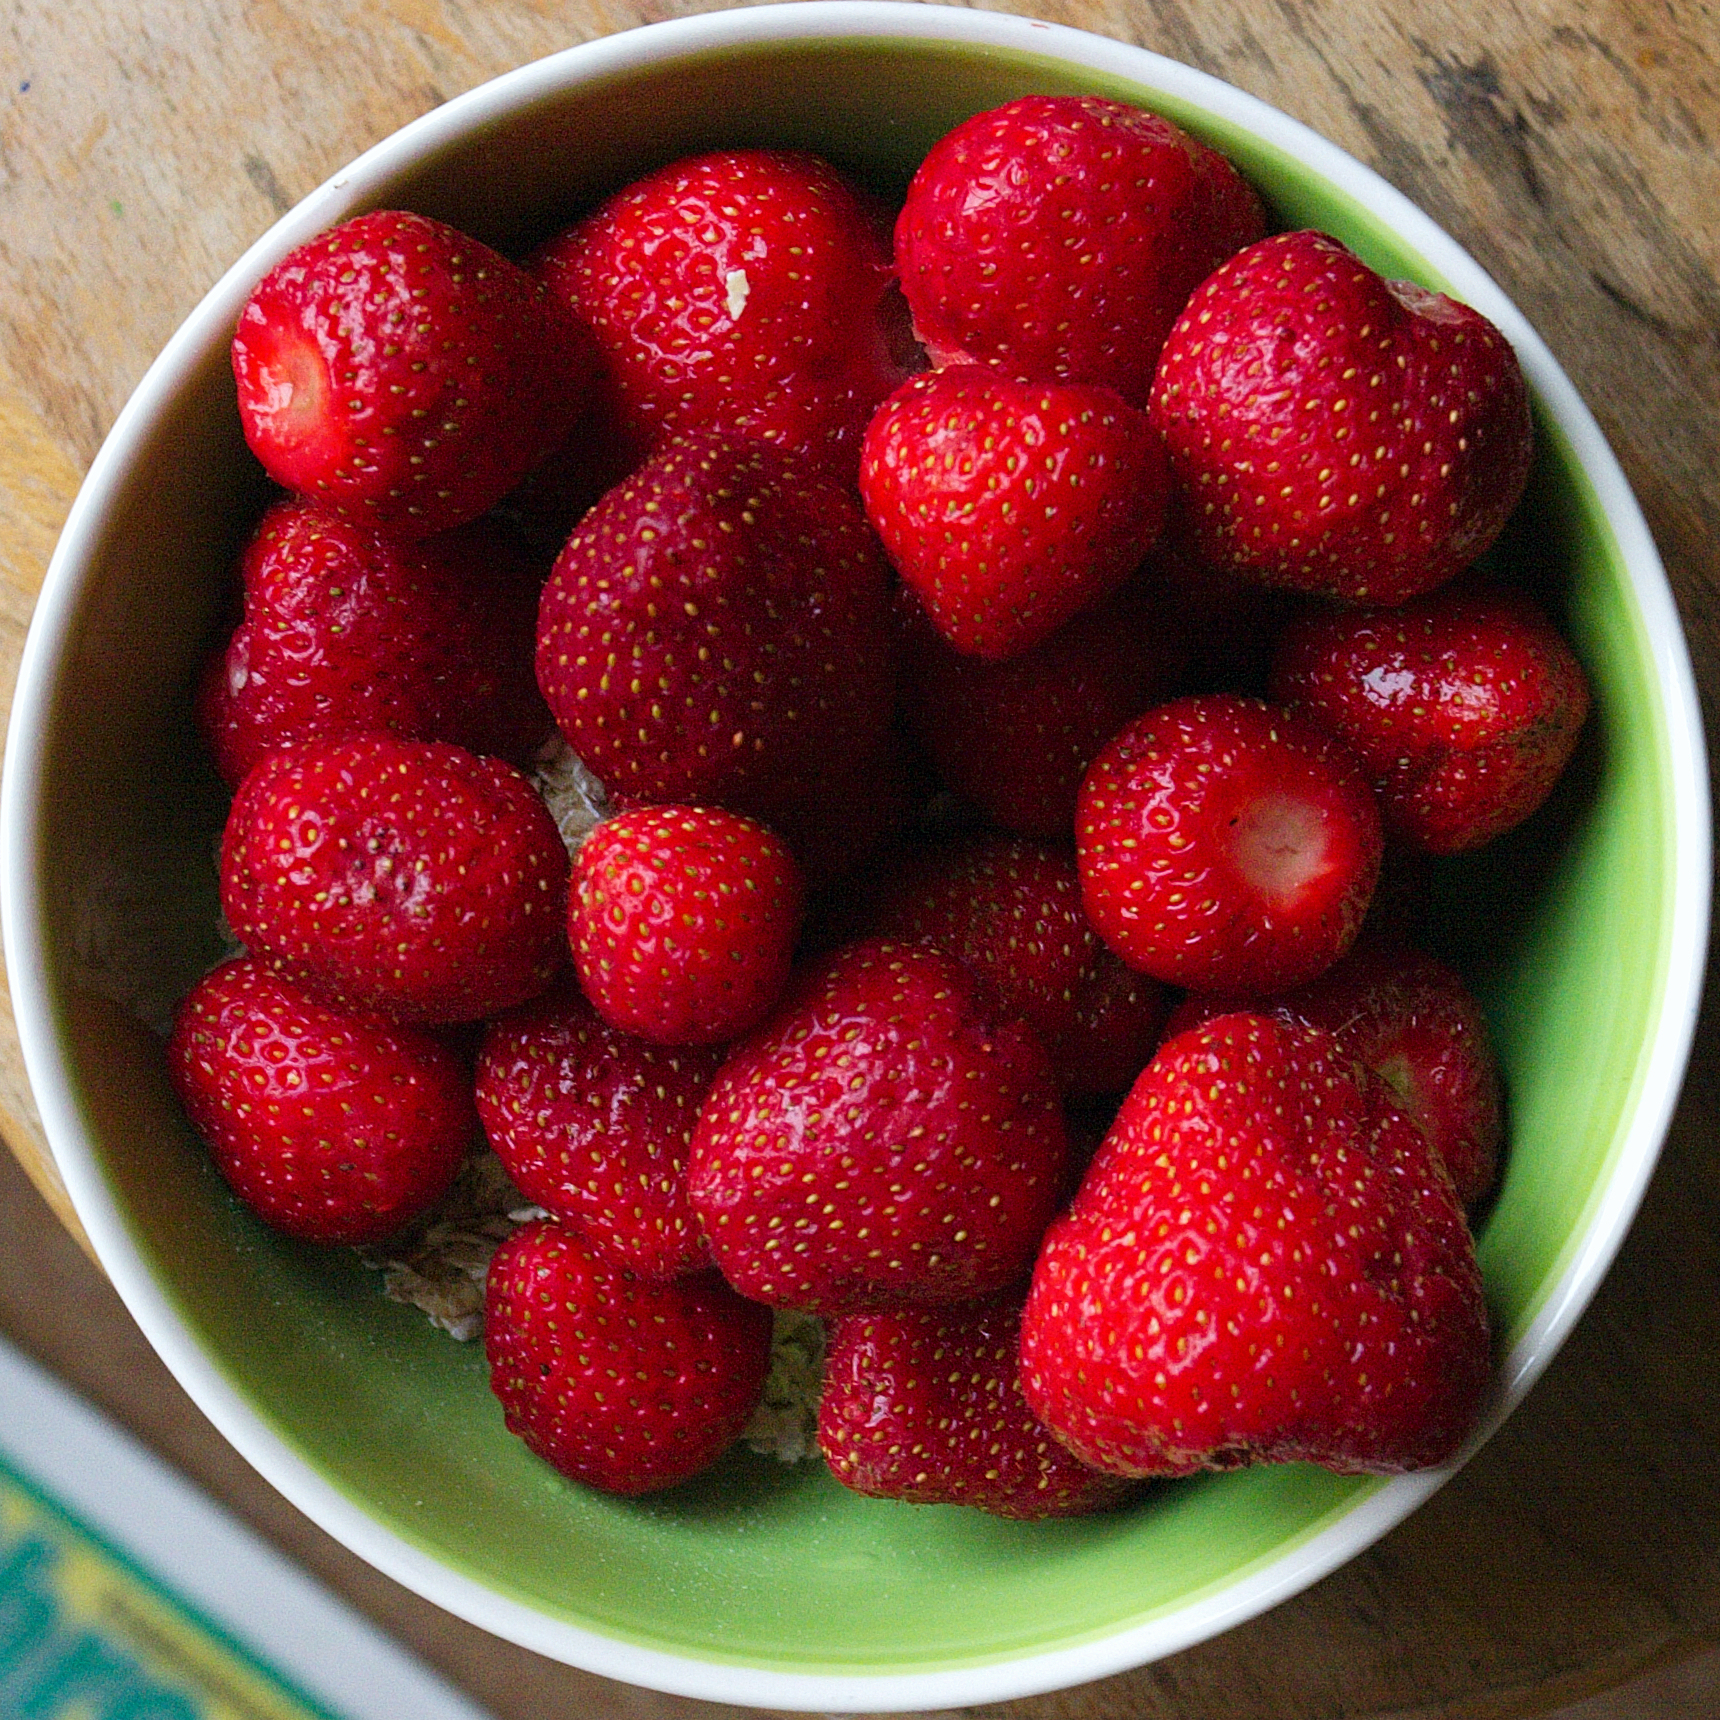 File:Bowl of strawberries.jpg - Wikimedia Commons